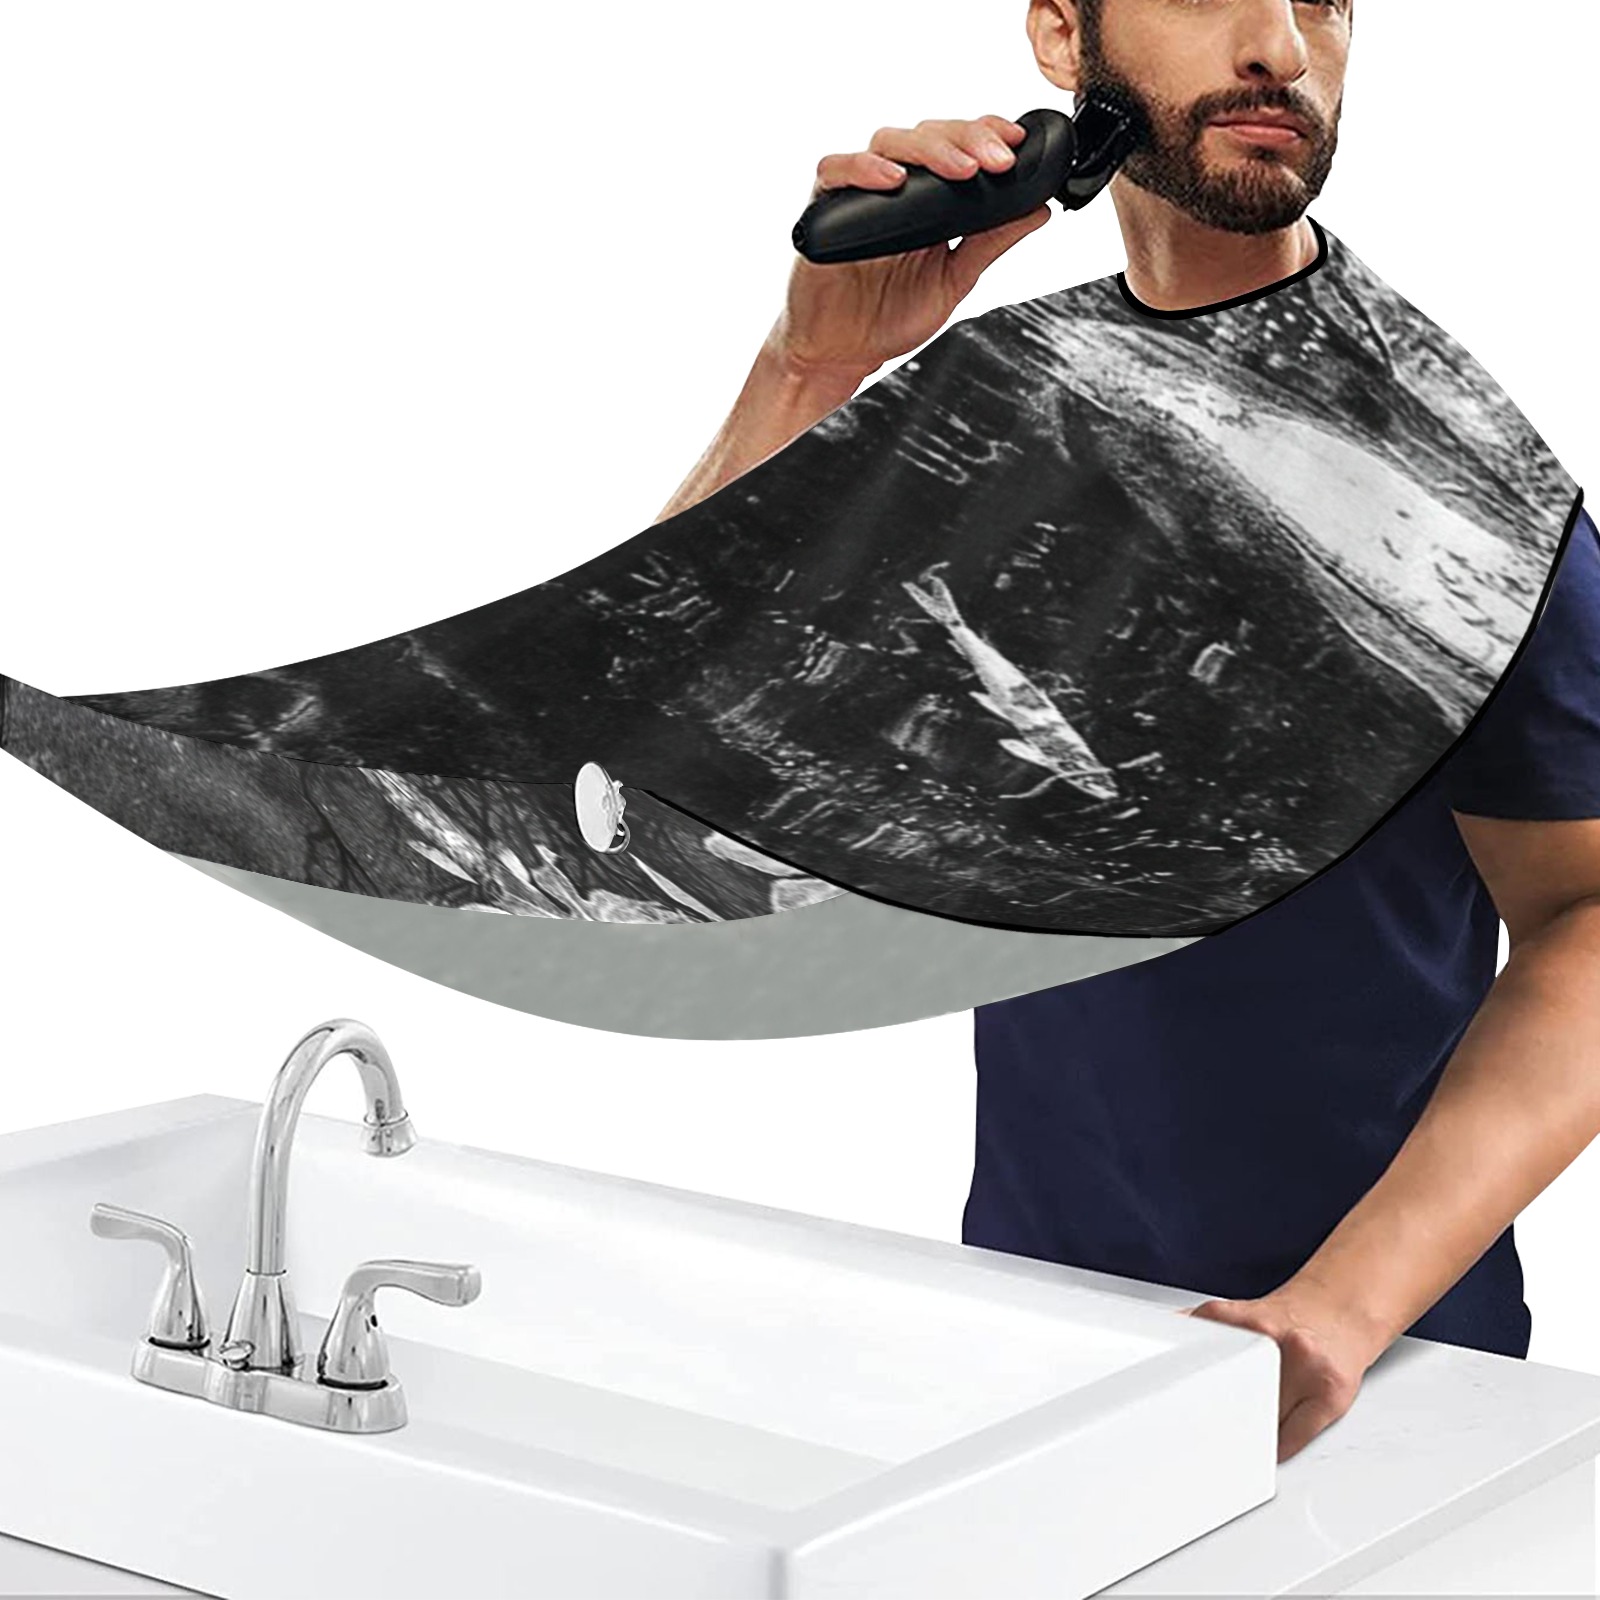 Reflecting Pond (Black & White) Beard Bib Apron for Men Shaving & Trimming